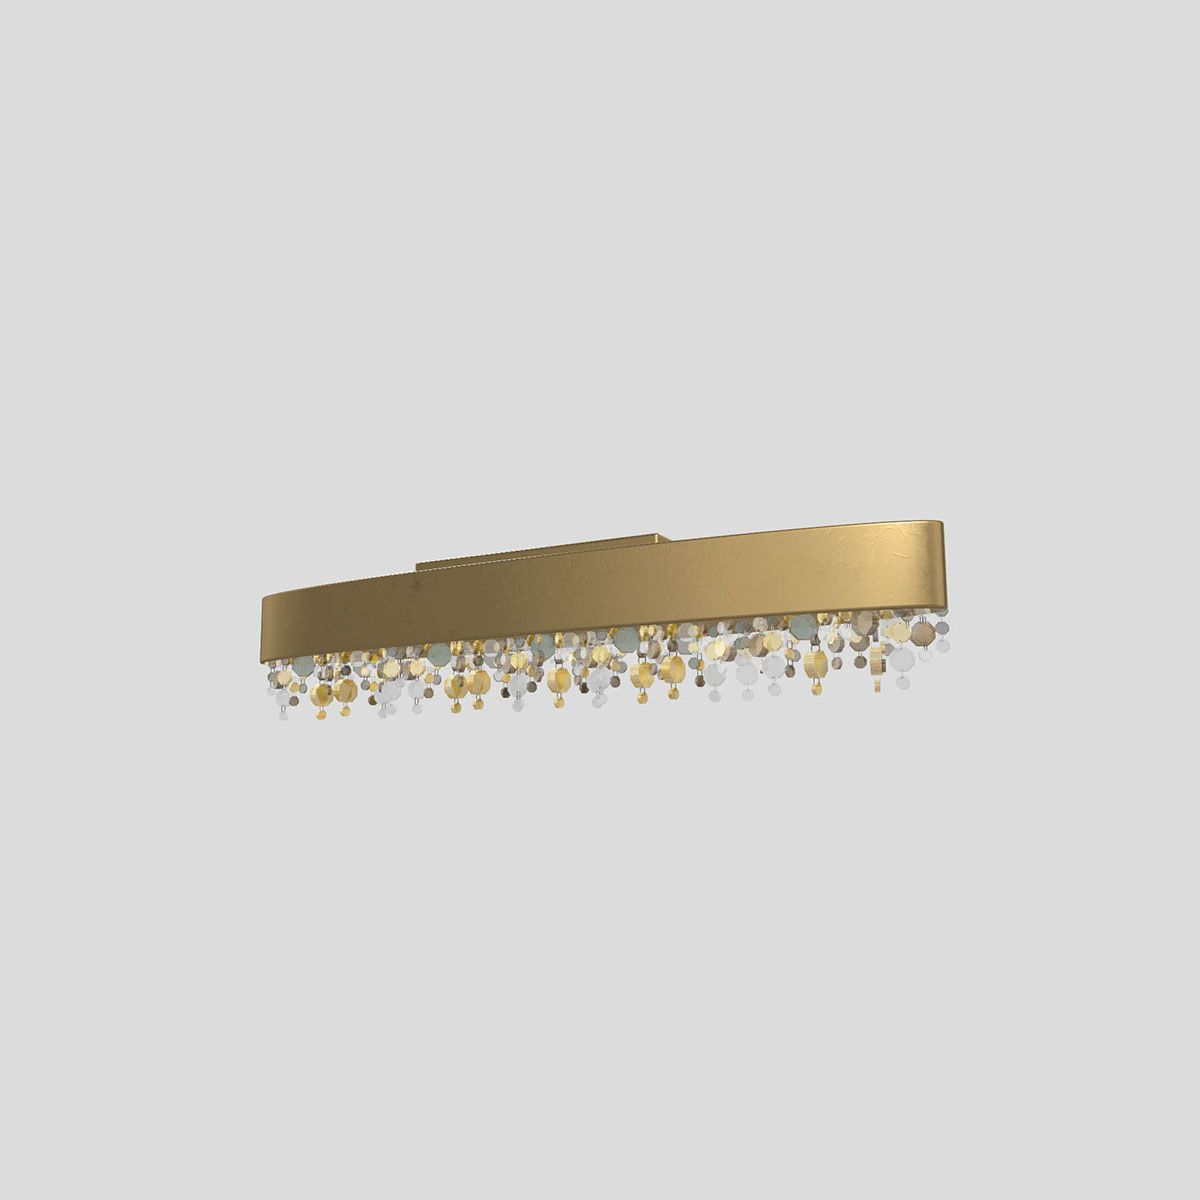 Olà PL4 OV 100 Deckenleuchte, Blattgold, L: 100 cm, LED-Modul